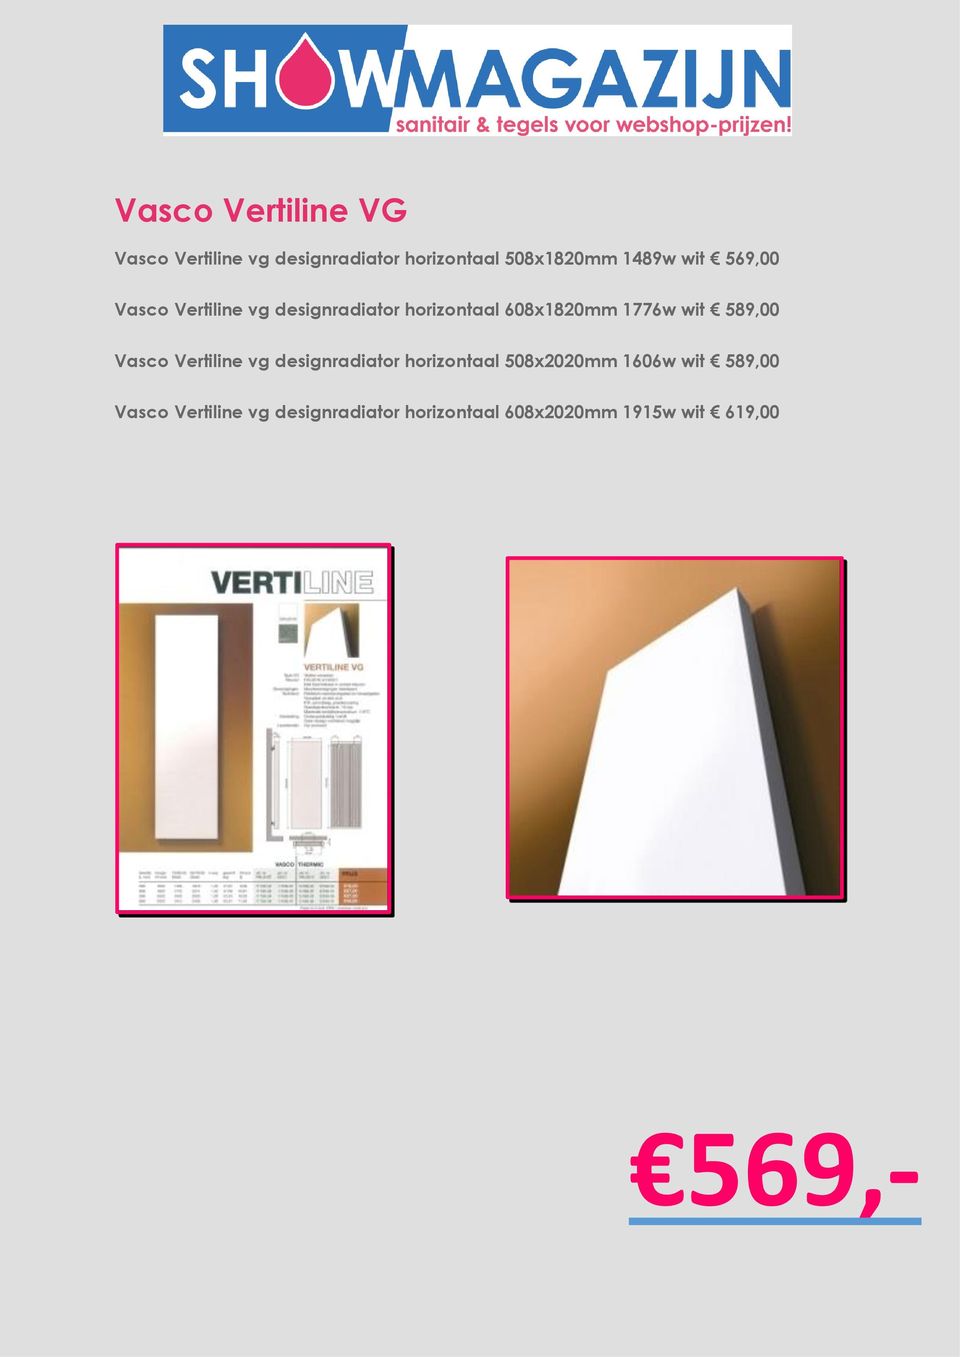 wit 589,00 Vasco Vertiline vg designradiator horizontaal 508x2020mm 1606w wit